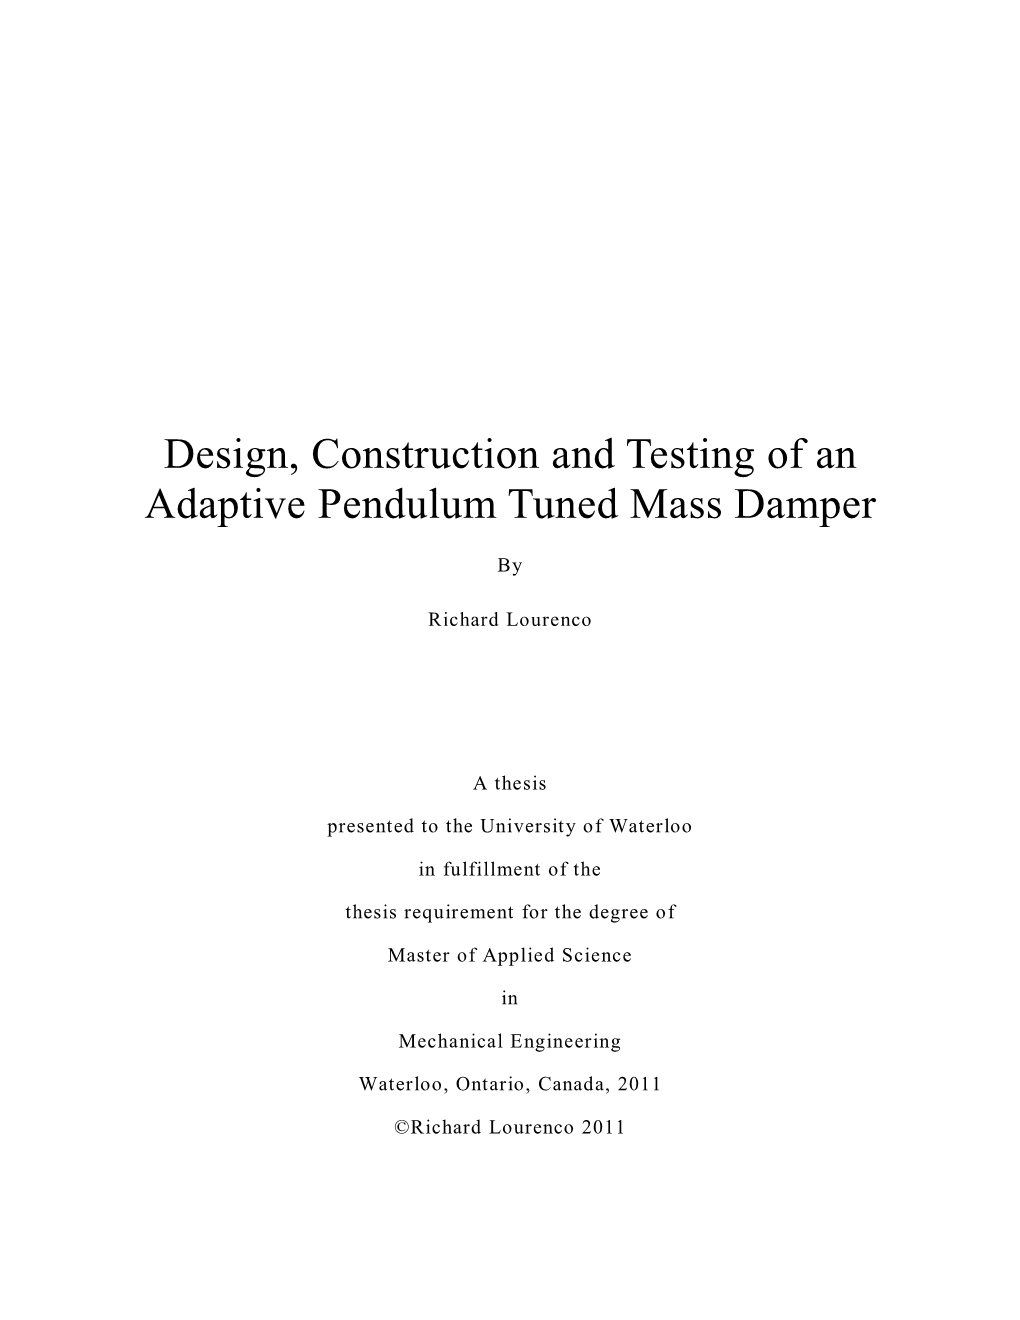 Design, Construction and Testing of an Adaptive Pendulum Tuned Mass Damper